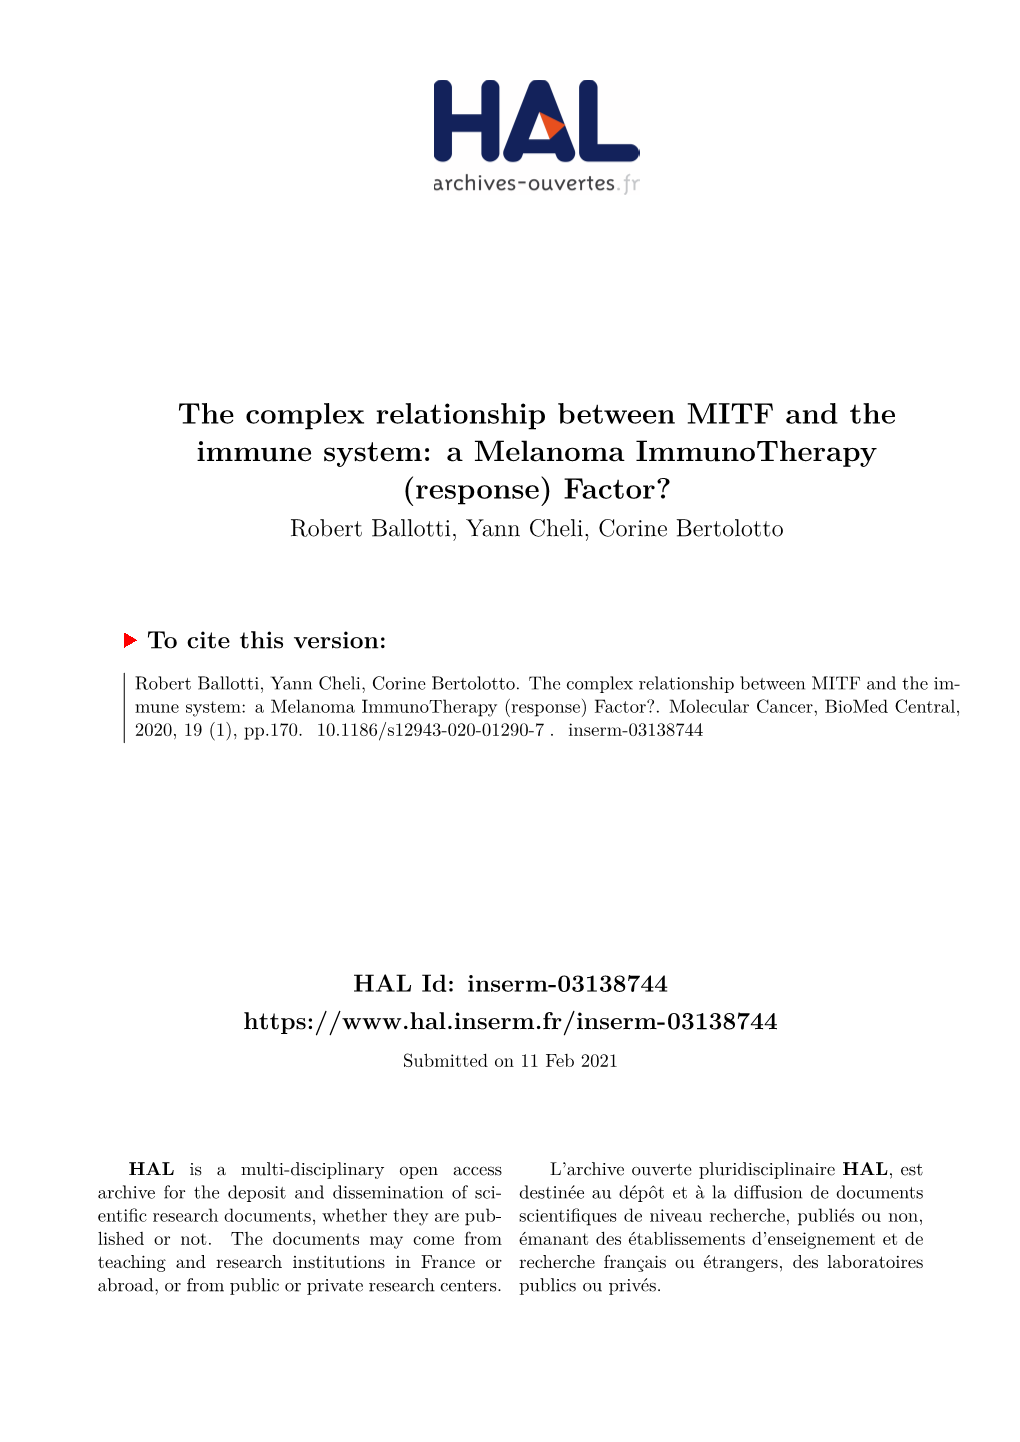 The Complex Relationship Between MITF and the Immune System: a Melanoma Immunotherapy (Response) Factor? Robert Ballotti, Yann Cheli, Corine Bertolotto